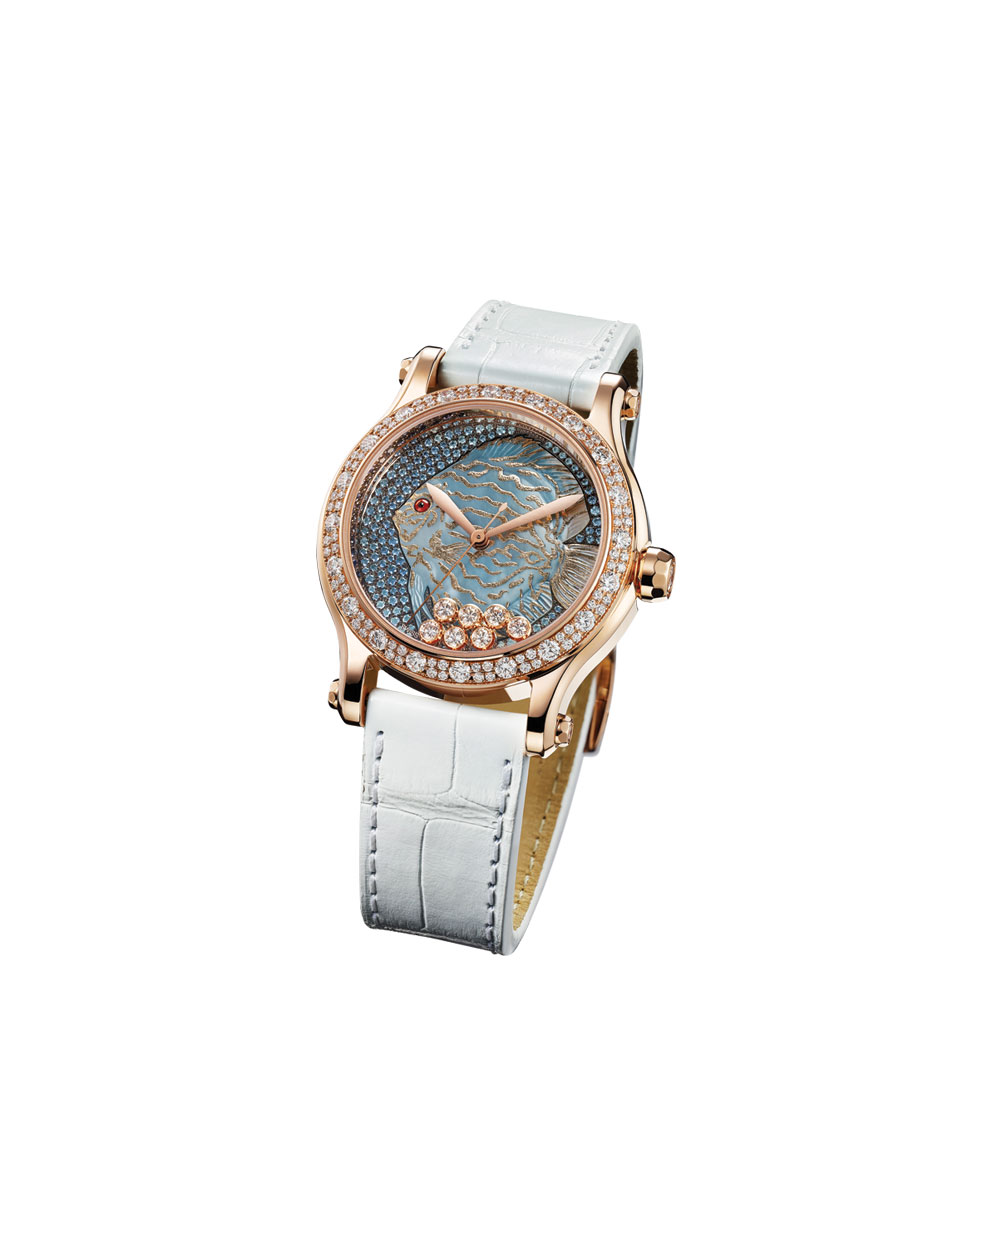 Chopard watch, $77,440